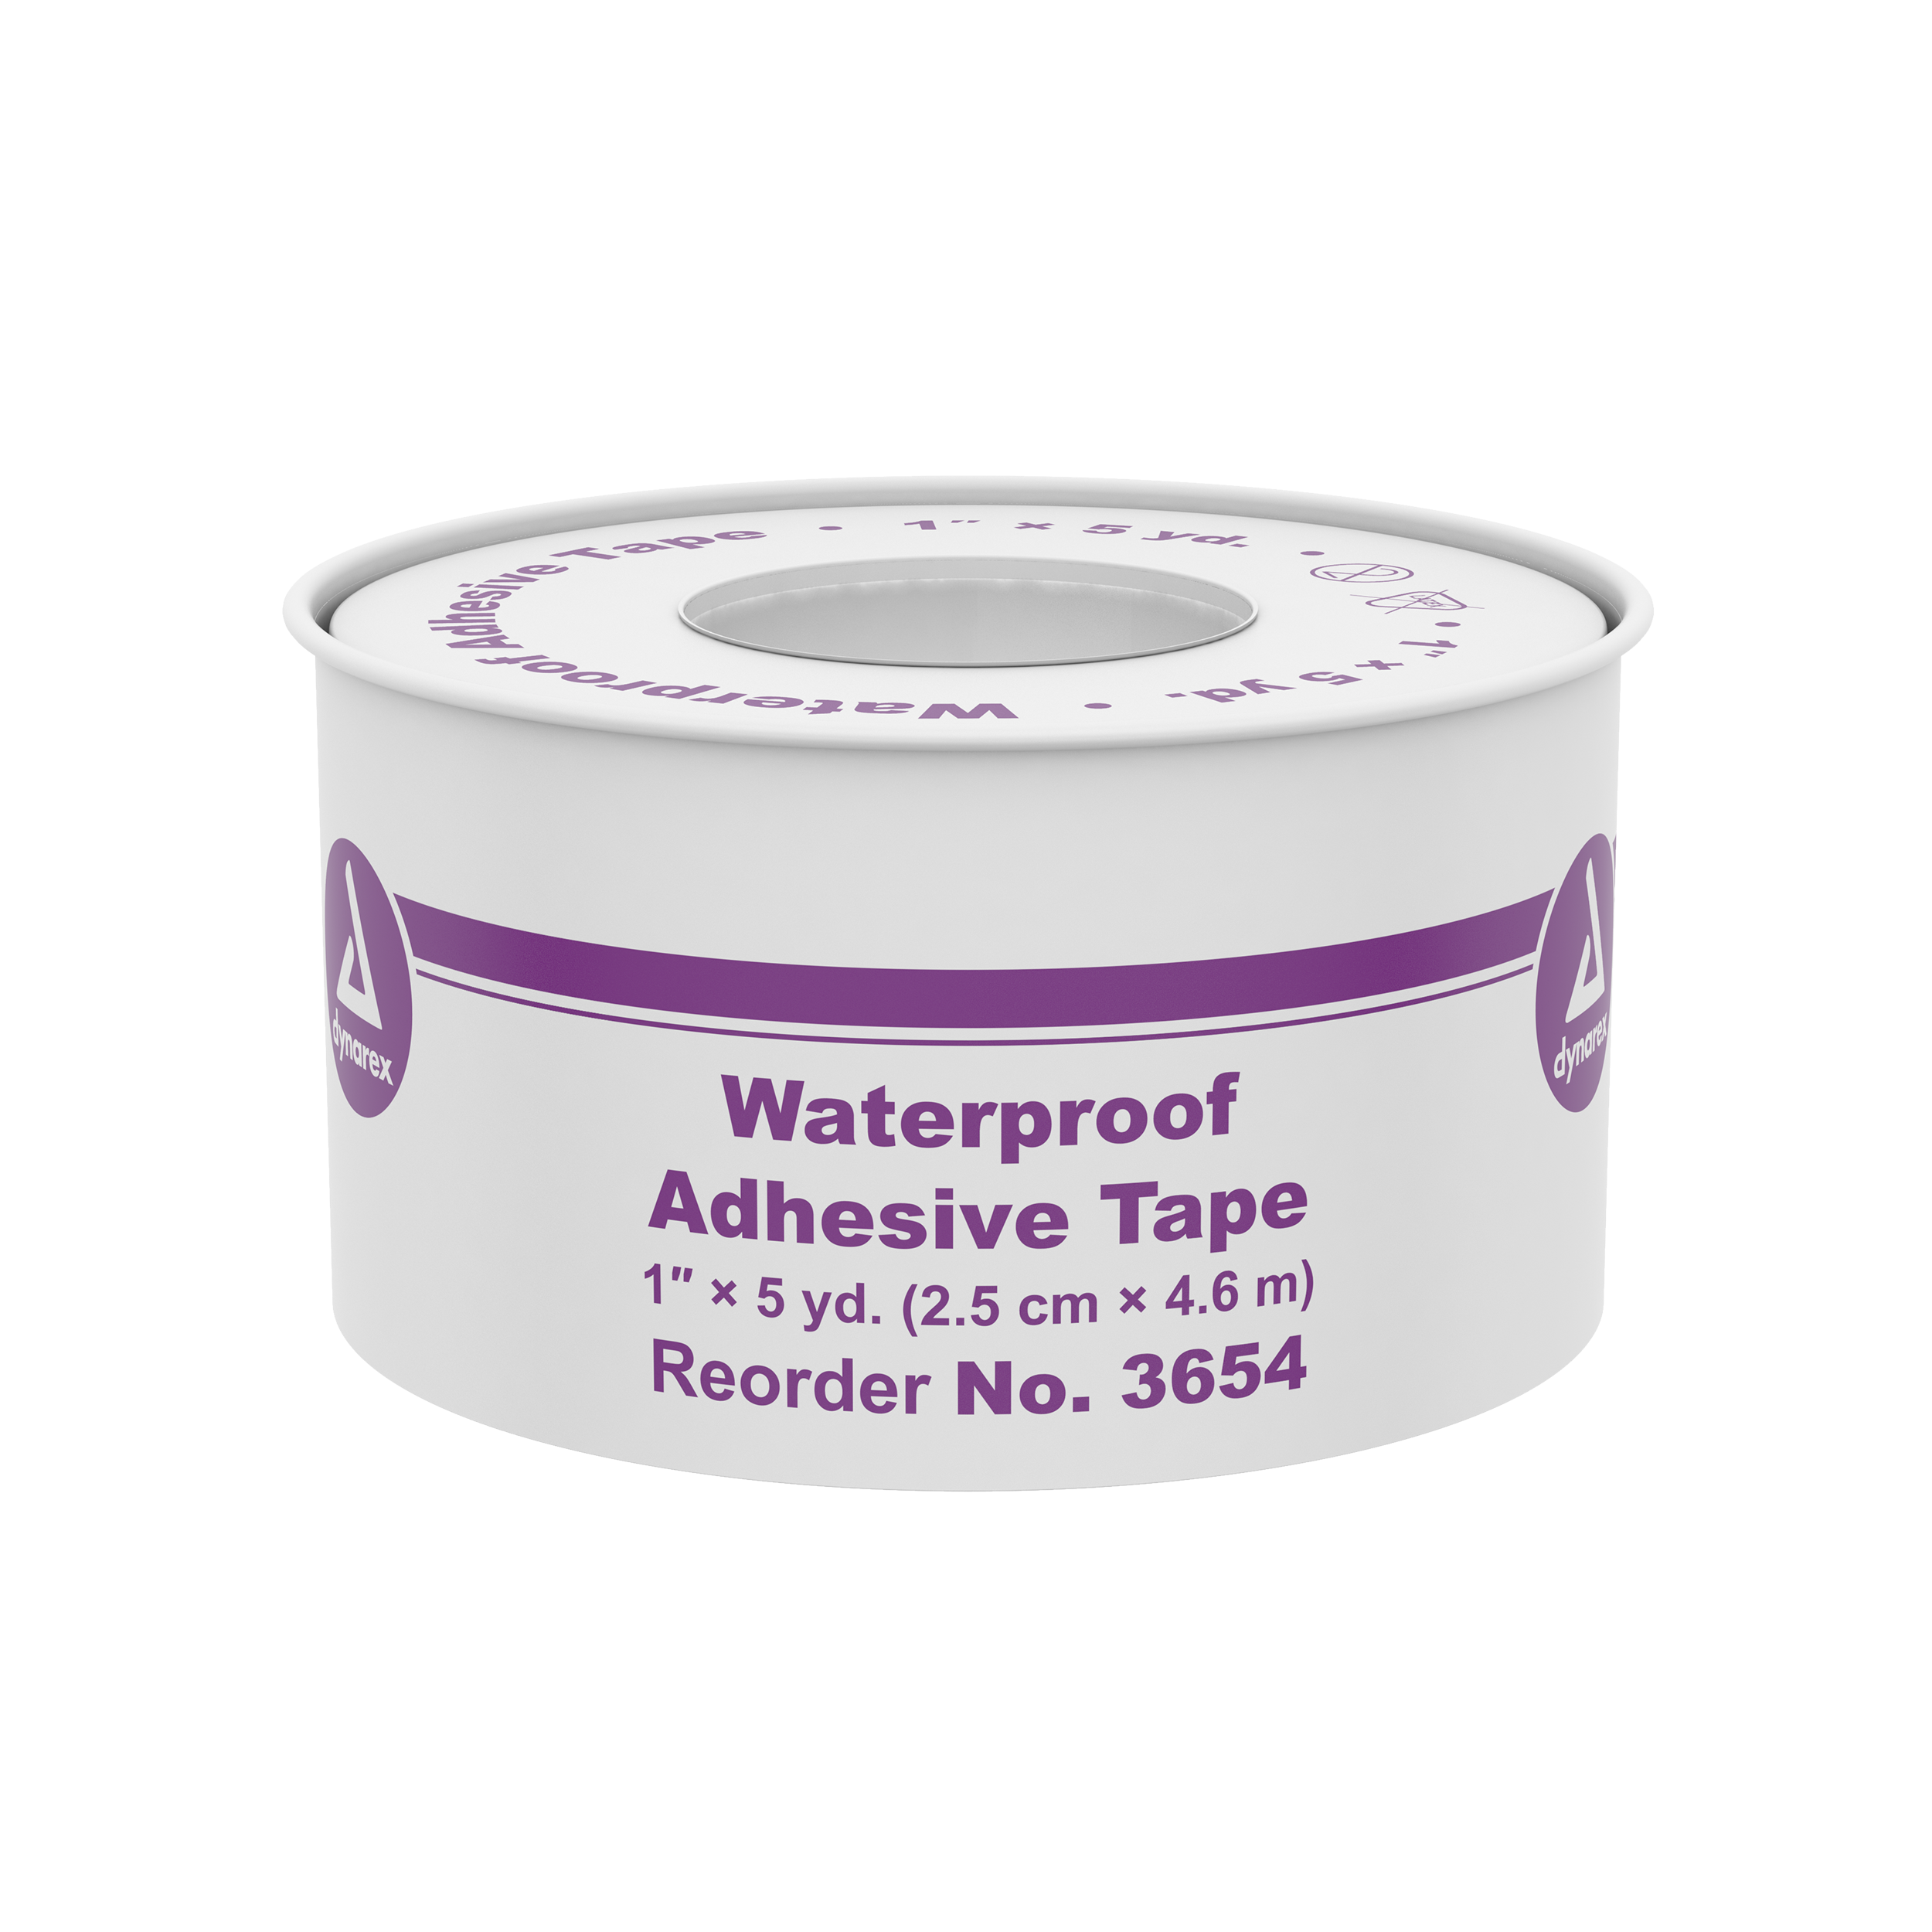 Waterproof Adhesive Tape 1